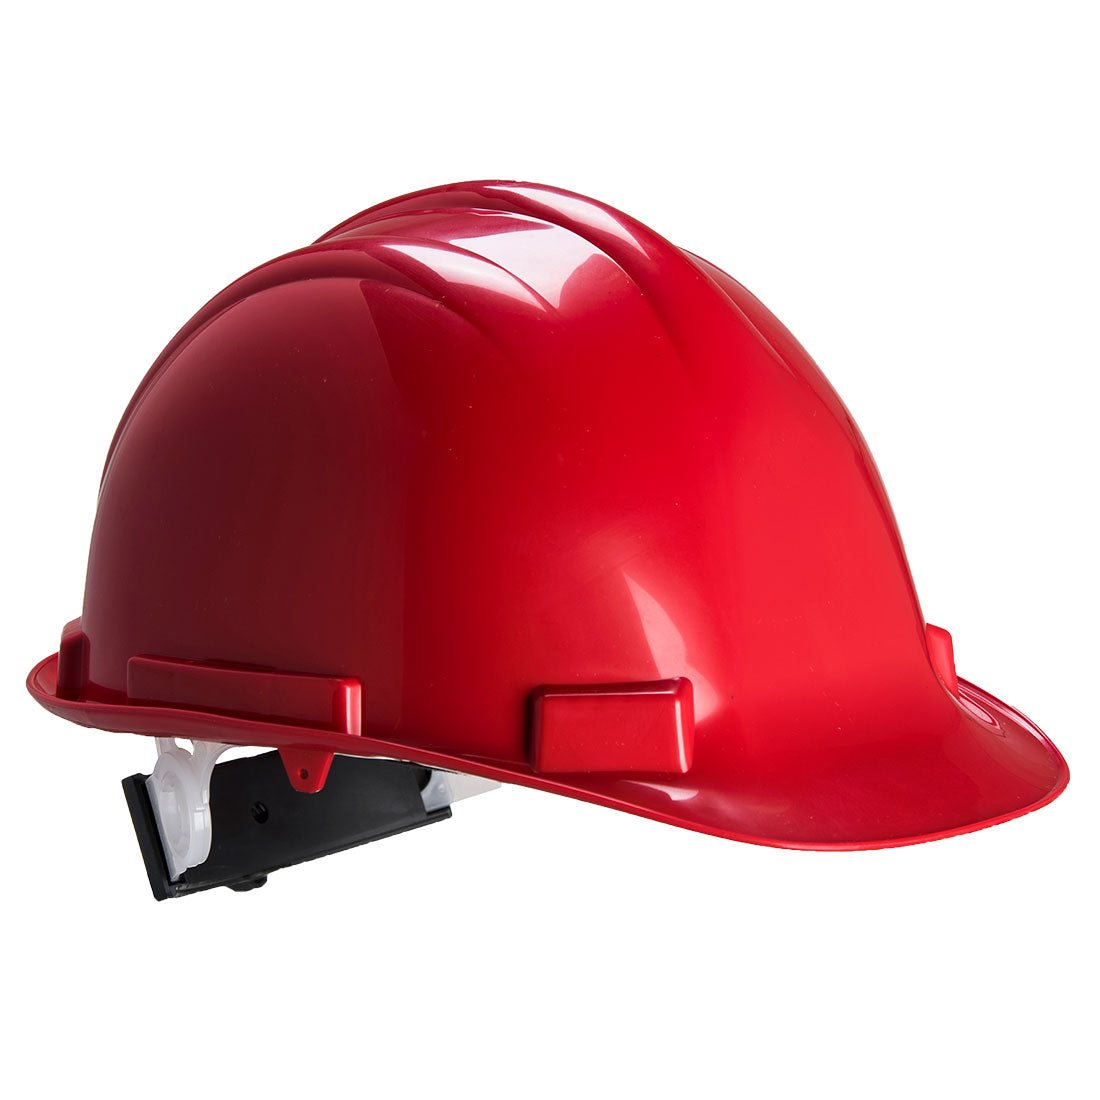 PW50 - Expertbase Safety Helmet